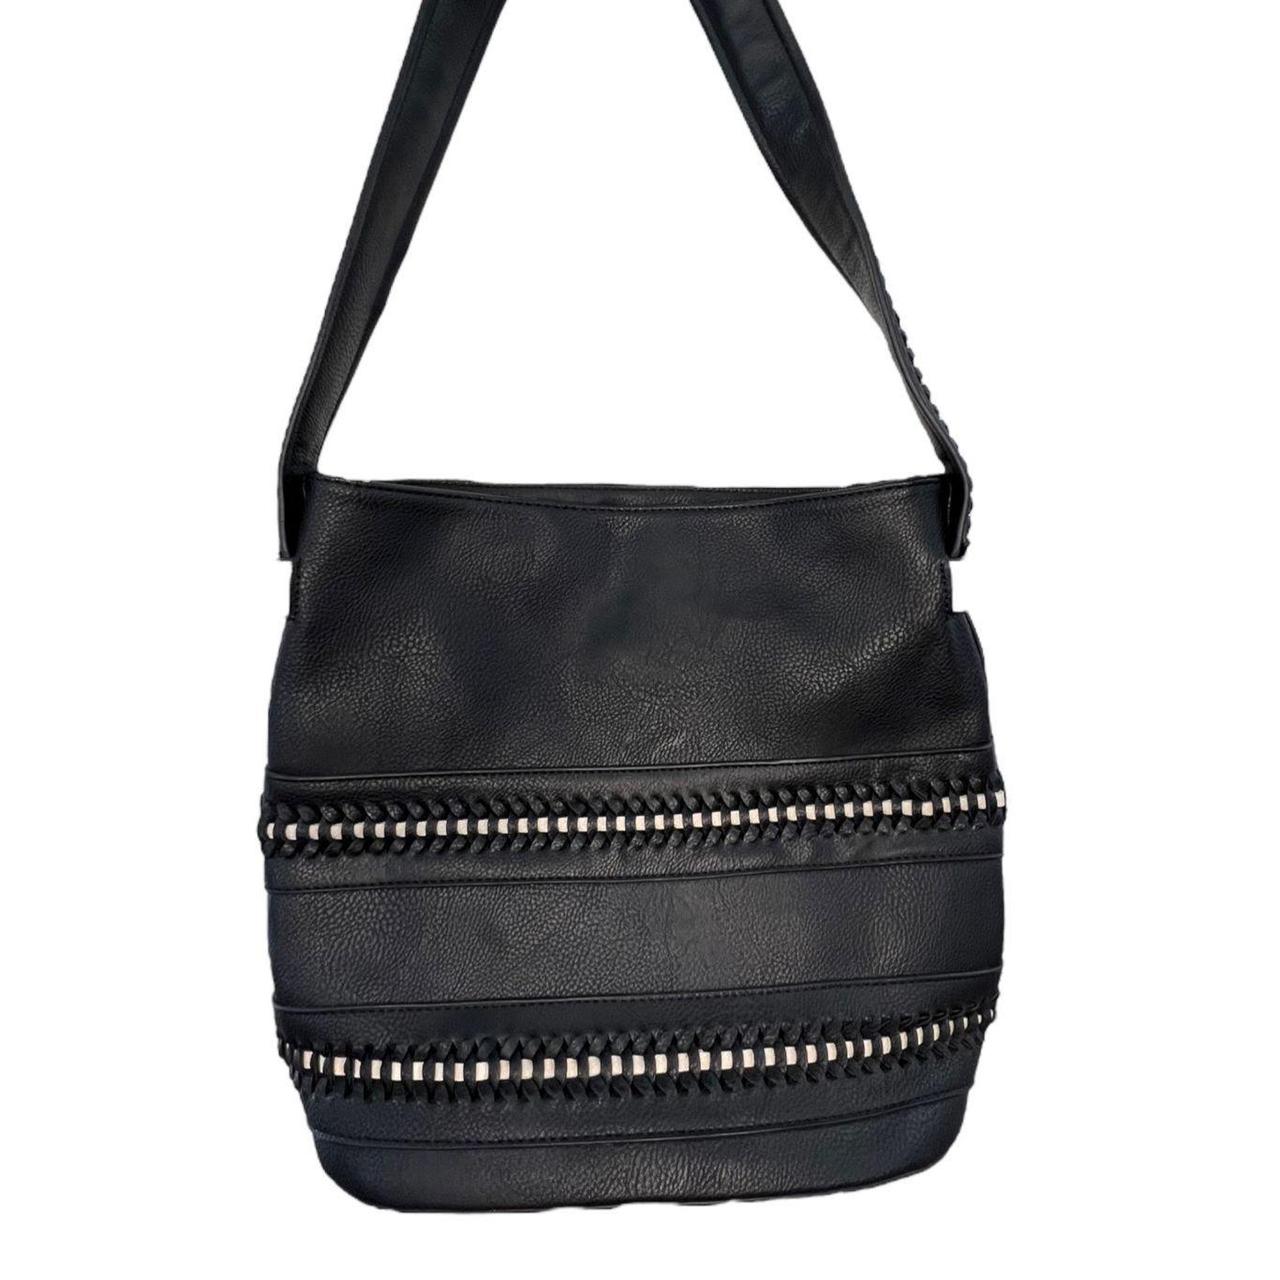 Gussaci Crossbody Bag Black with Gray Suede Like Trim. Like New. | Black  cross body bag, Crossbody bag, Bags